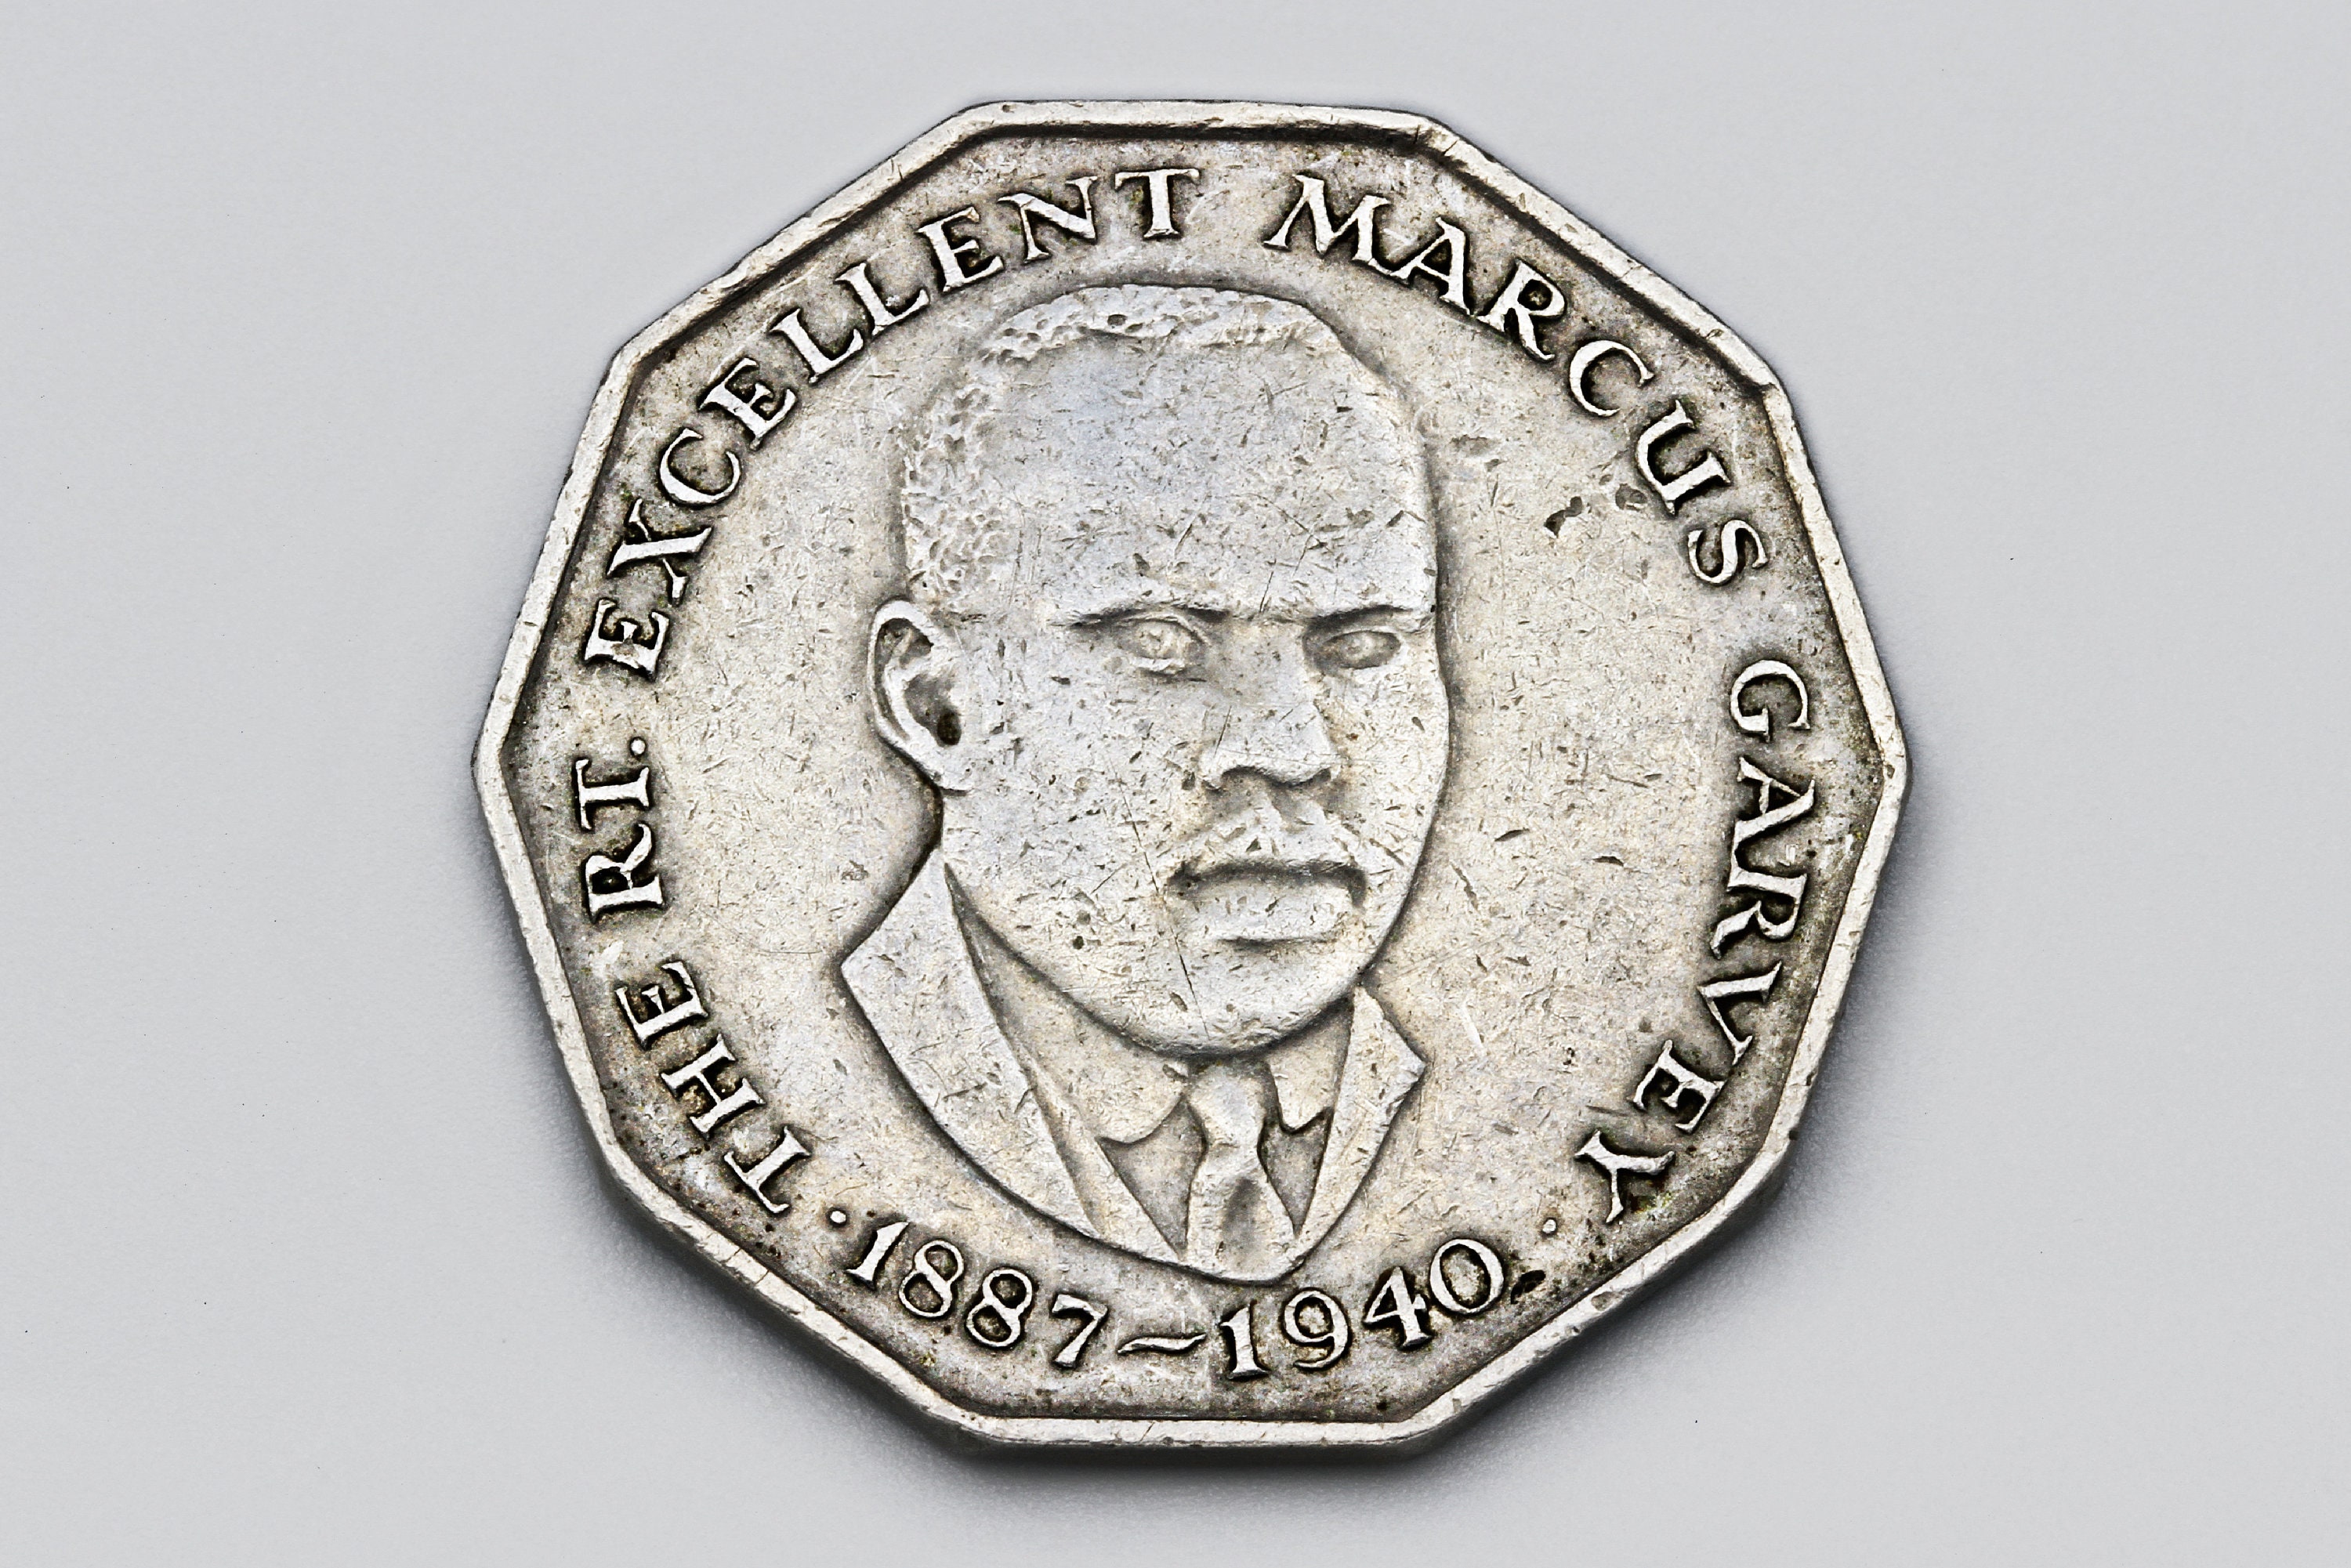 50 cents Jamaican Dollars banknote Marcus Garvey - Exchange for cash